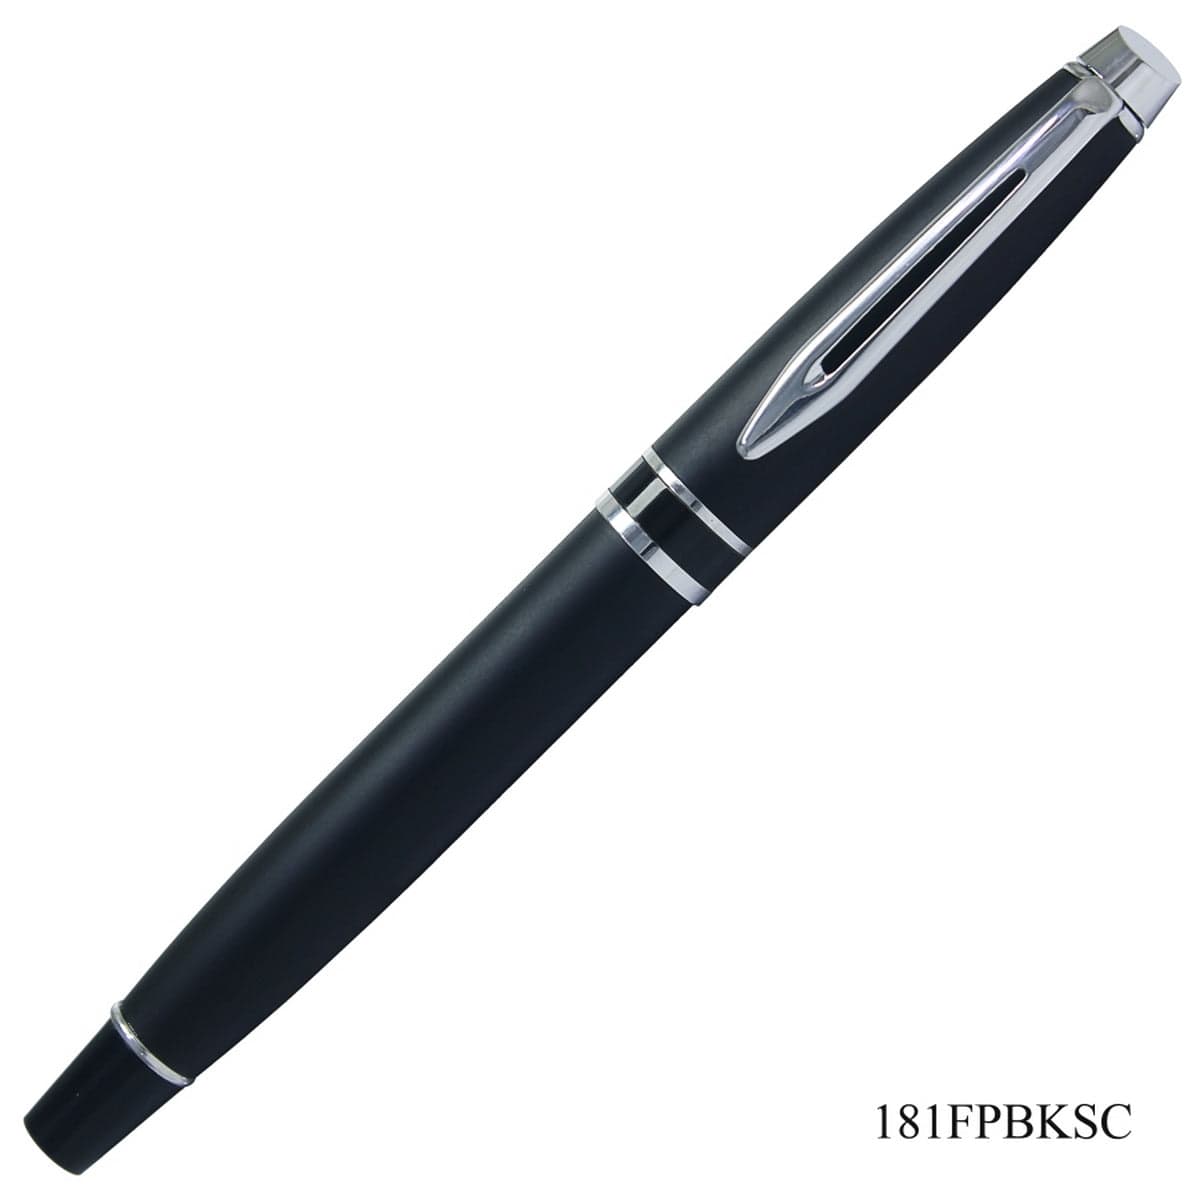 jags-mumbai Miniature "Elegant Fountain Pen: Black with Silver Clip - Model 181FPBKSC"